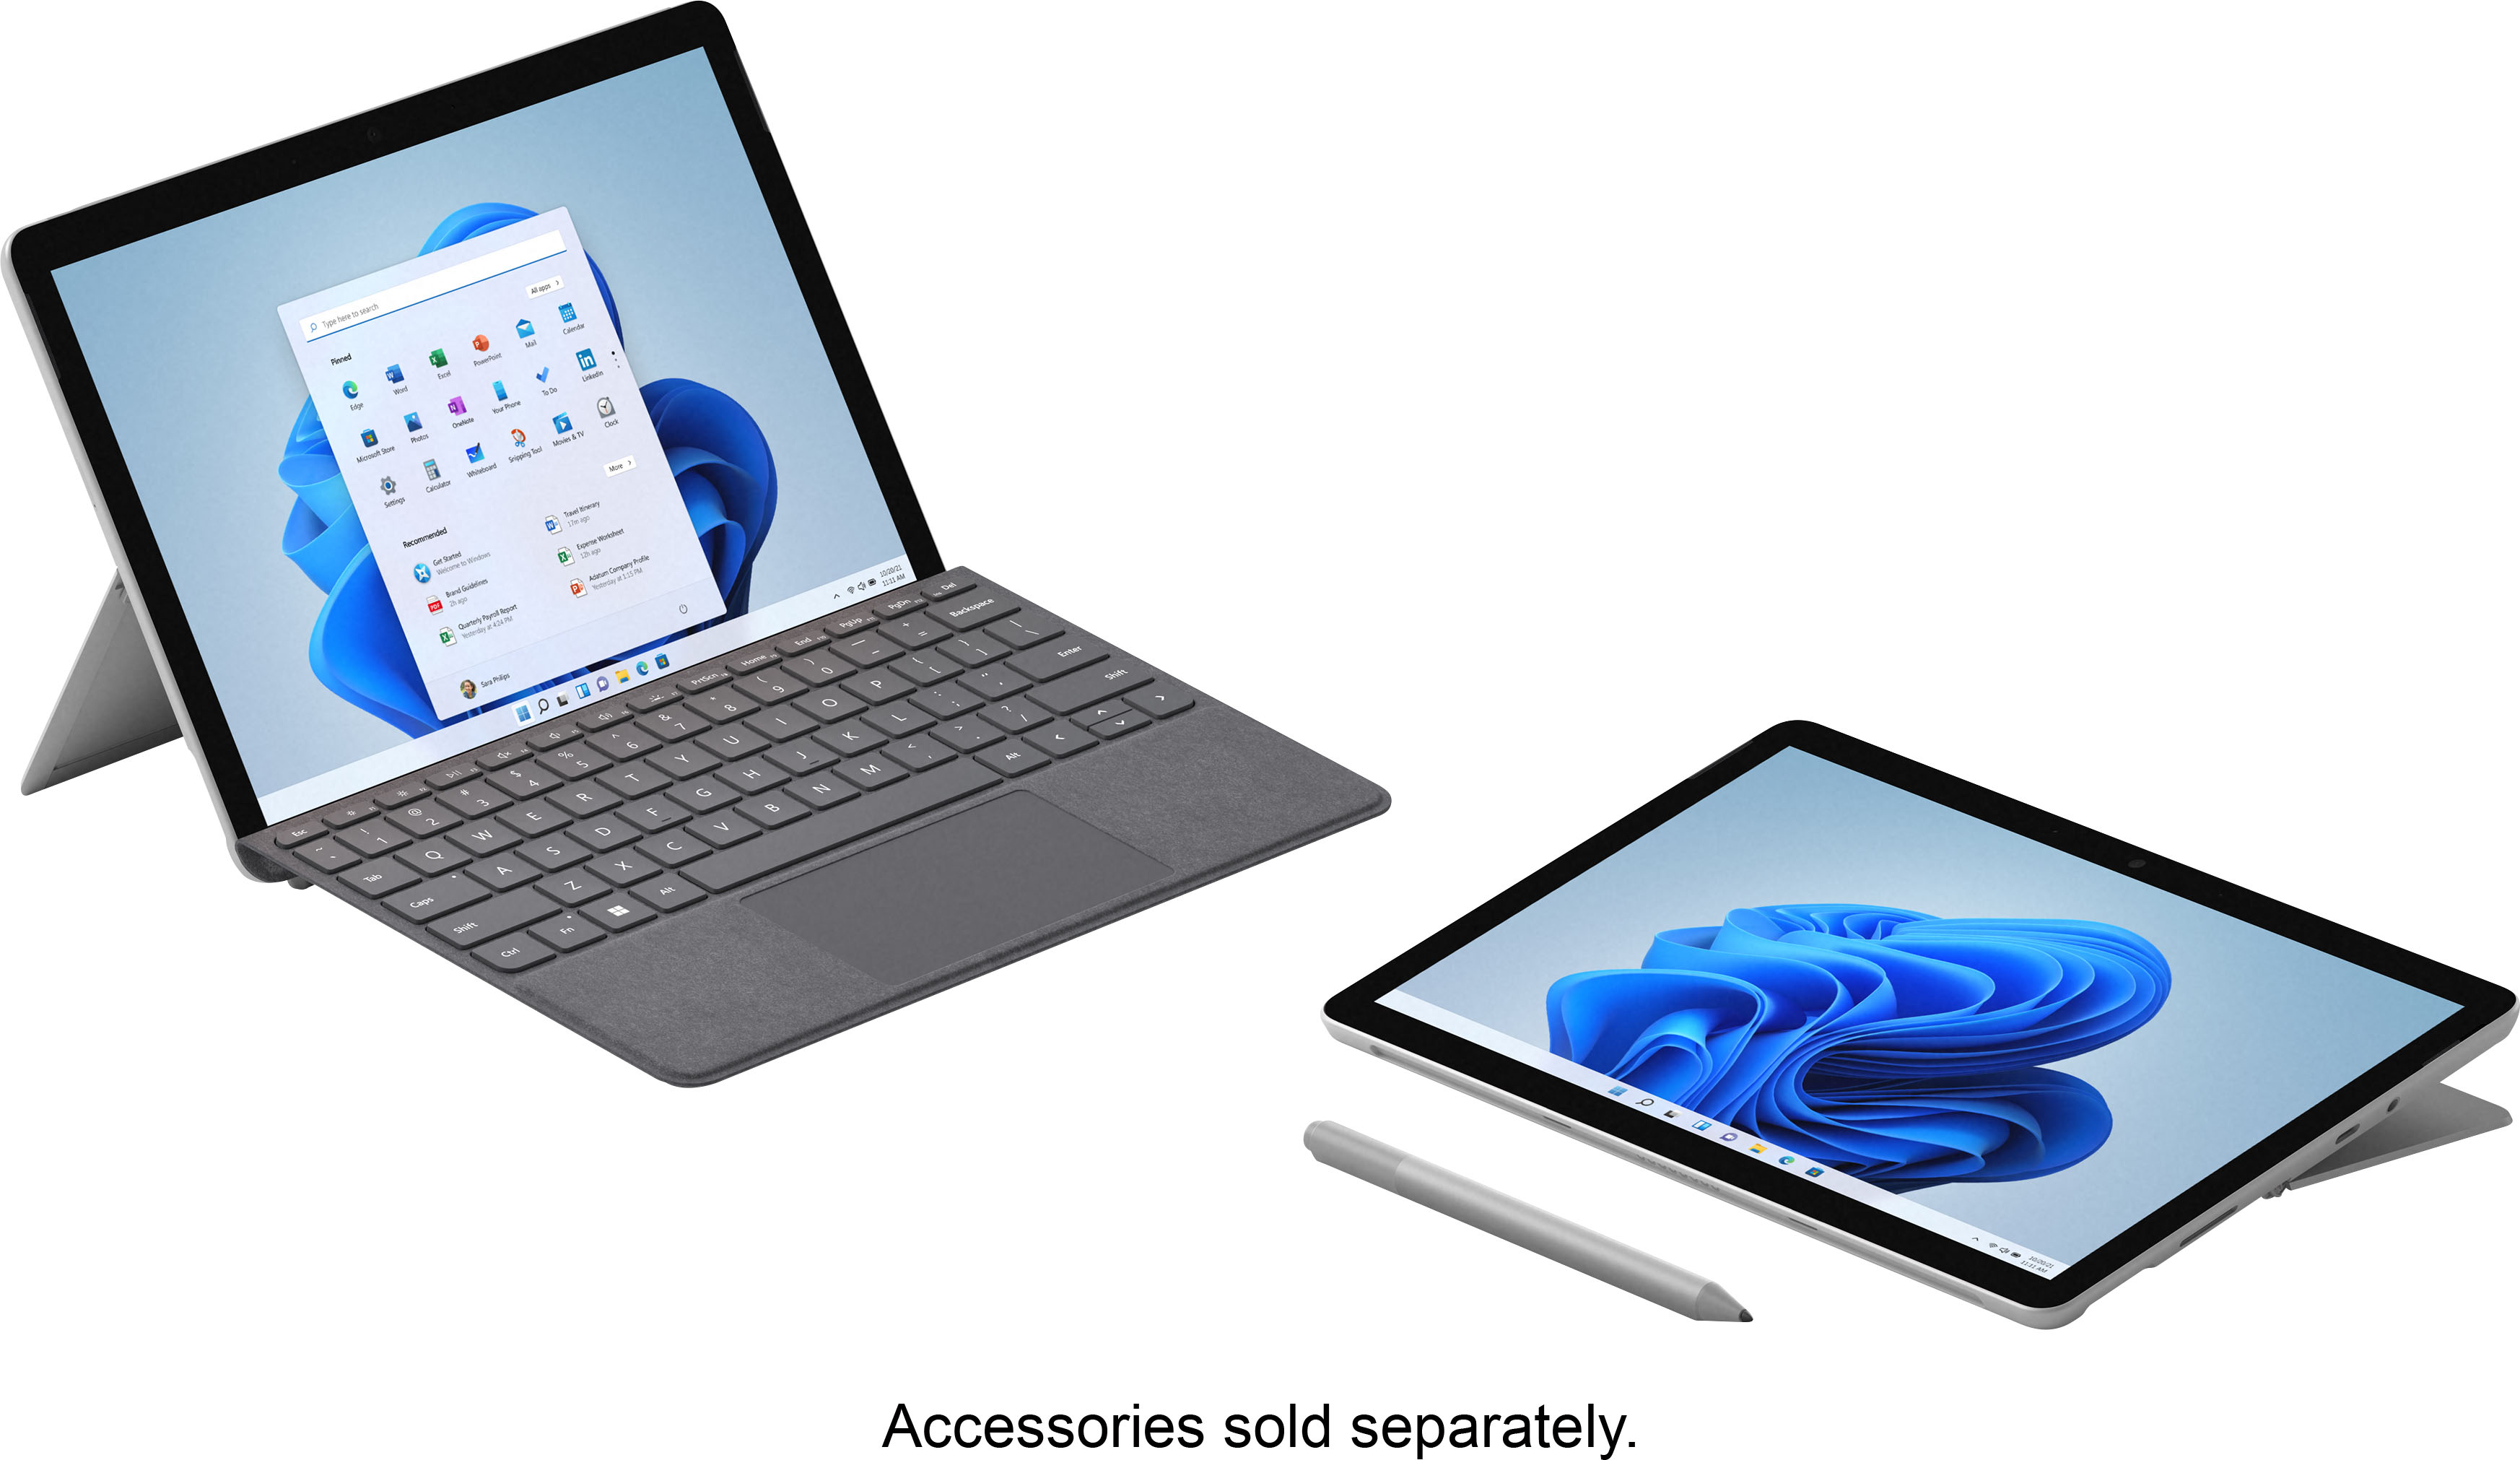 Surface Go 3 LTE  i3 8GB SSD 128GB【保証有】